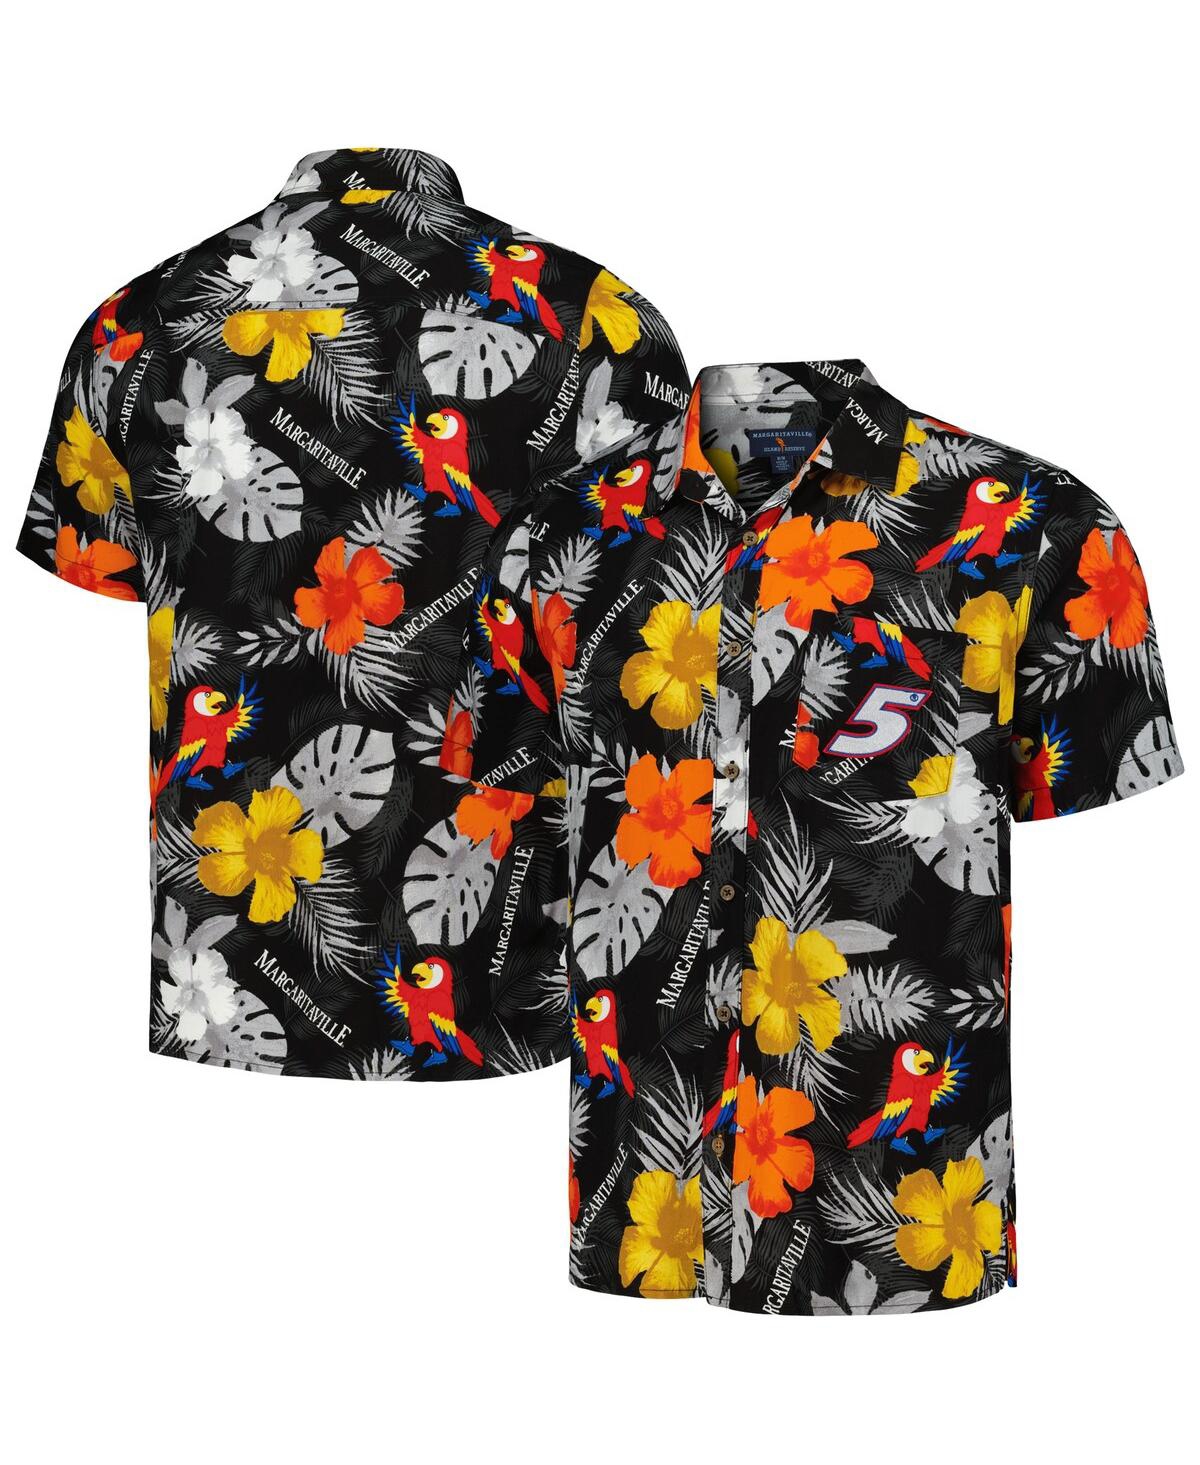 Men's Margaritaville Black Kyle Larson Island Life Floral Party Full-Button Shirt - Black